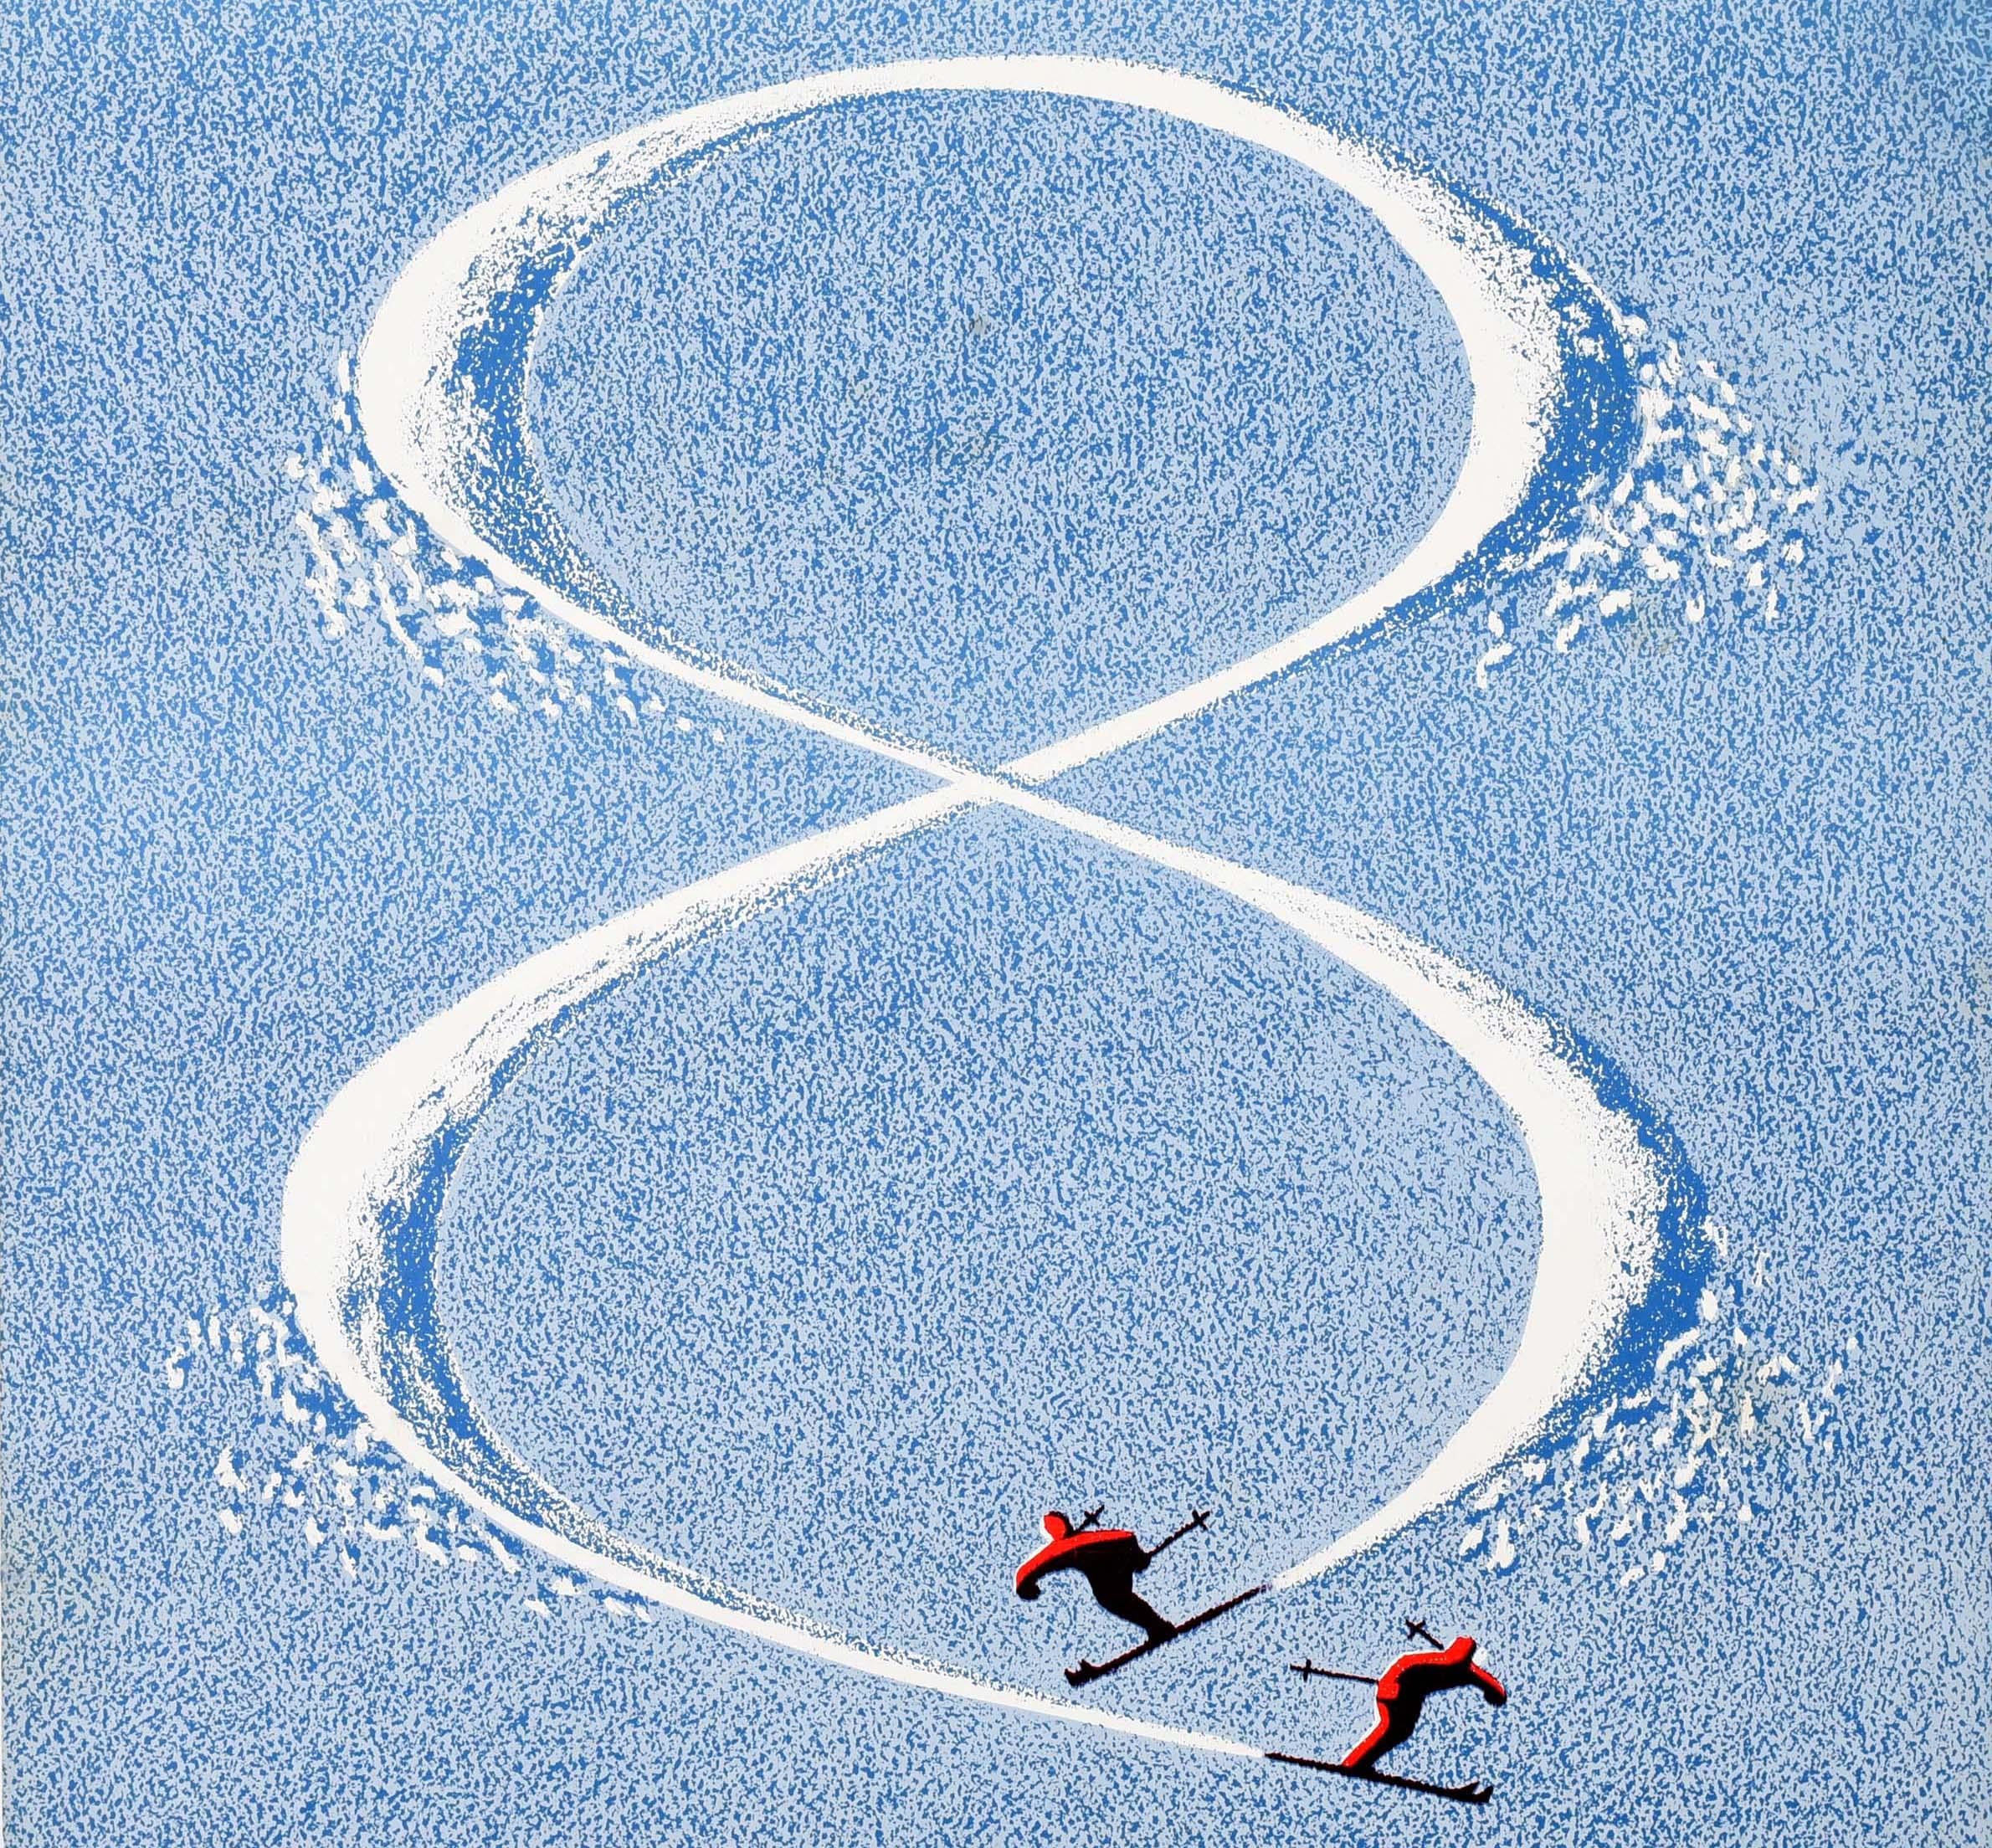 Original Vintage Winter Sport Poster Aspen Ski Colorado USA 1968 Interski Skiing - Print by Unknown